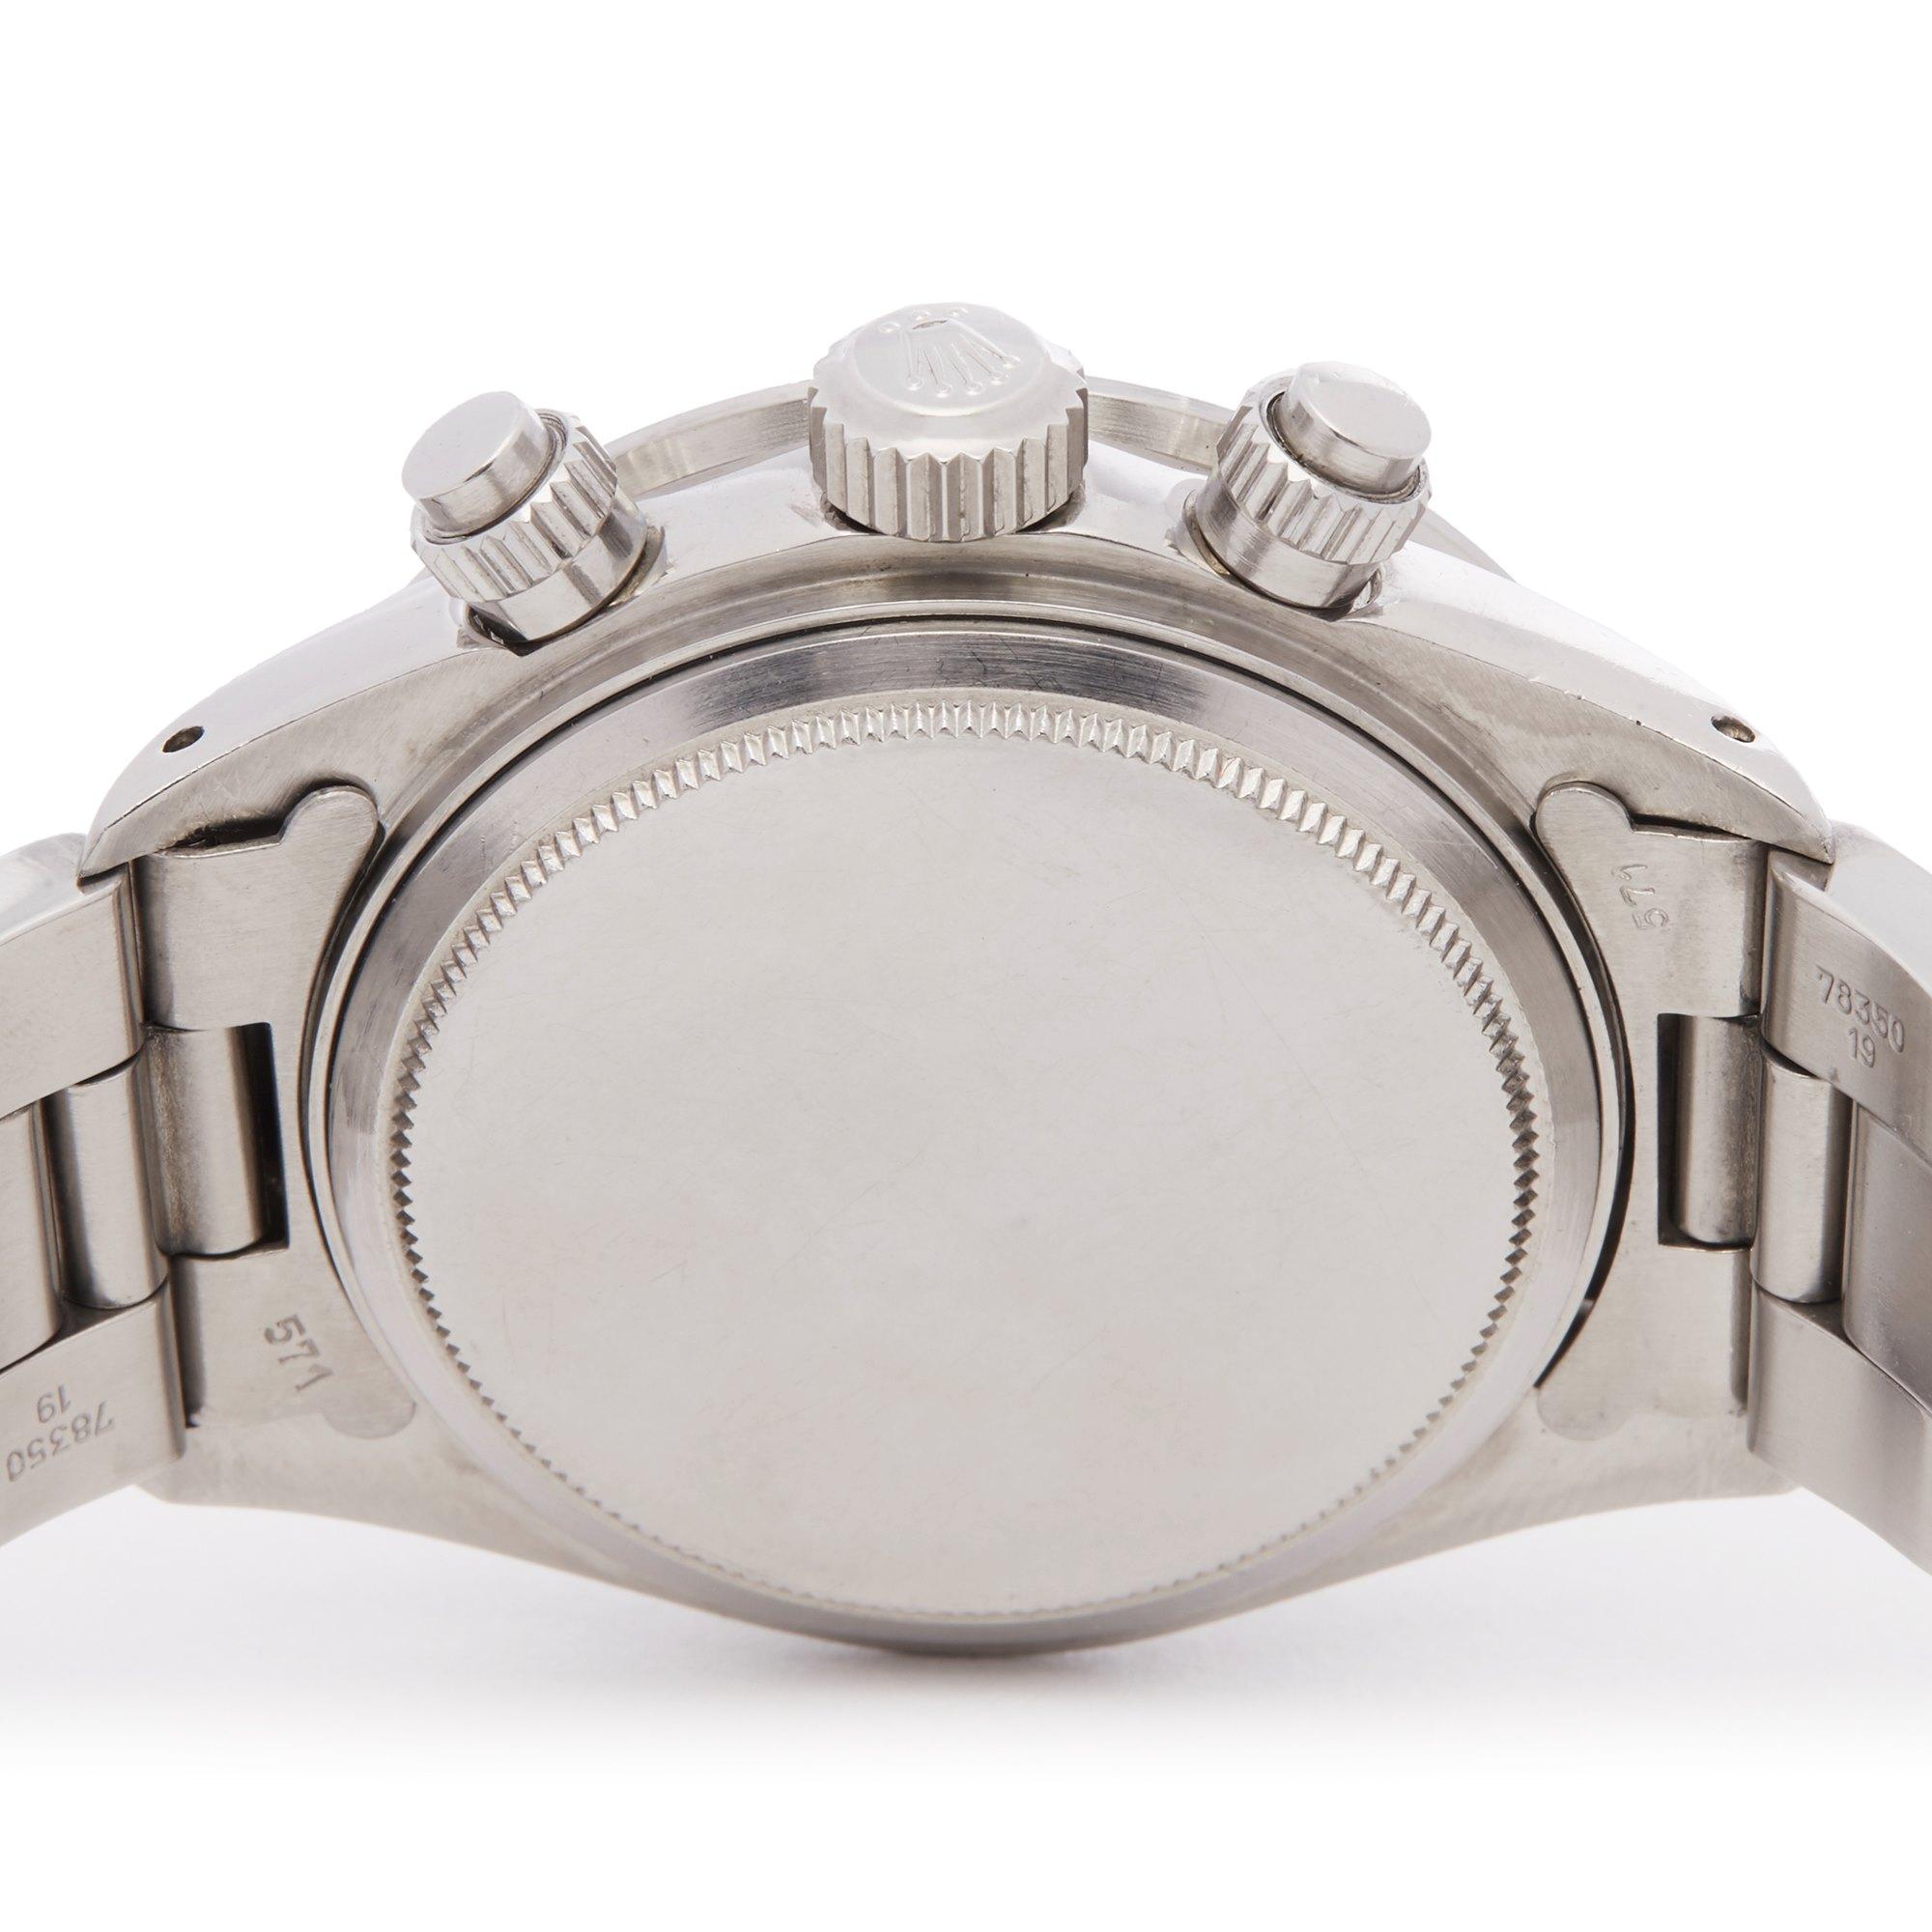 Women's or Men's Rolex Daytona 6263 Men's Stainless Steel Watch